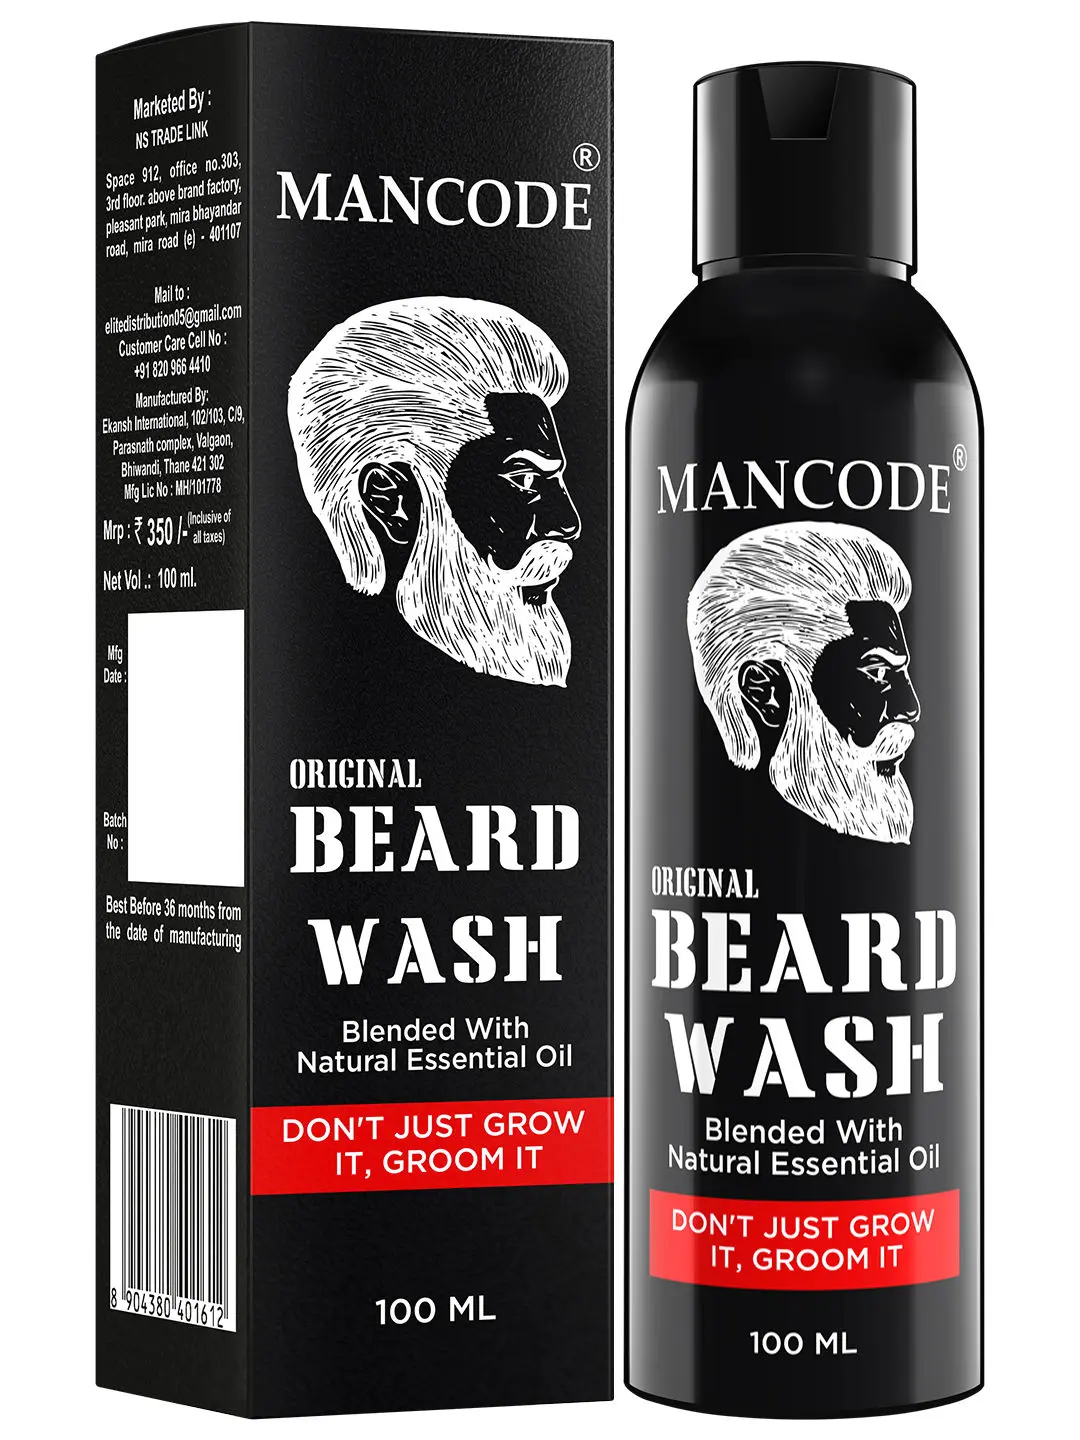 Mancode Beard Wash Original For Men Blended with Natural Essential Oil (100 ml)